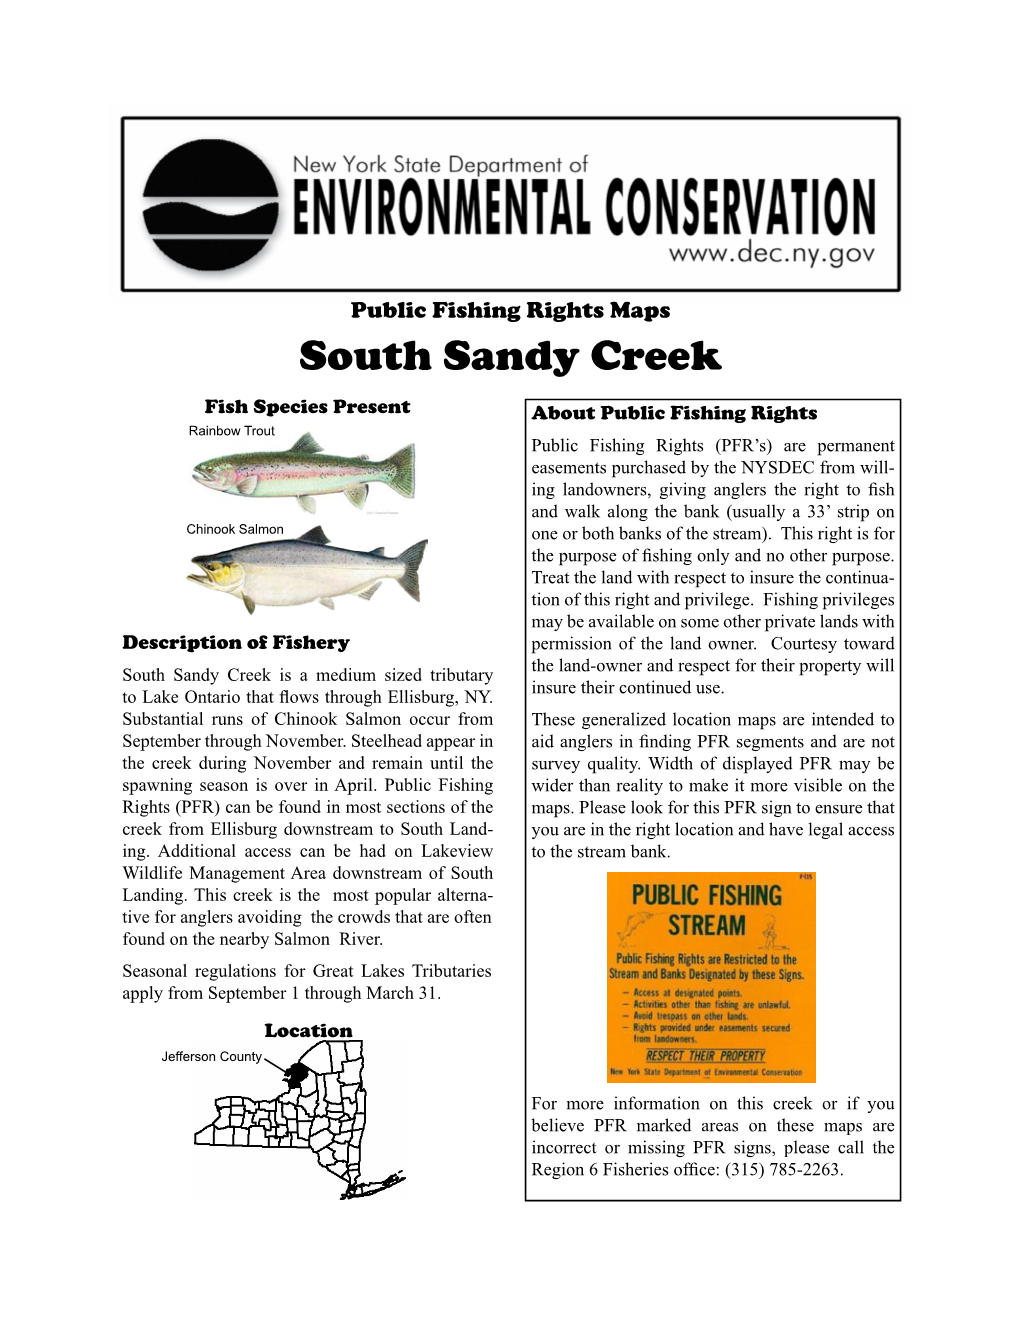 Public Fishing Rights: South Sandy Creek